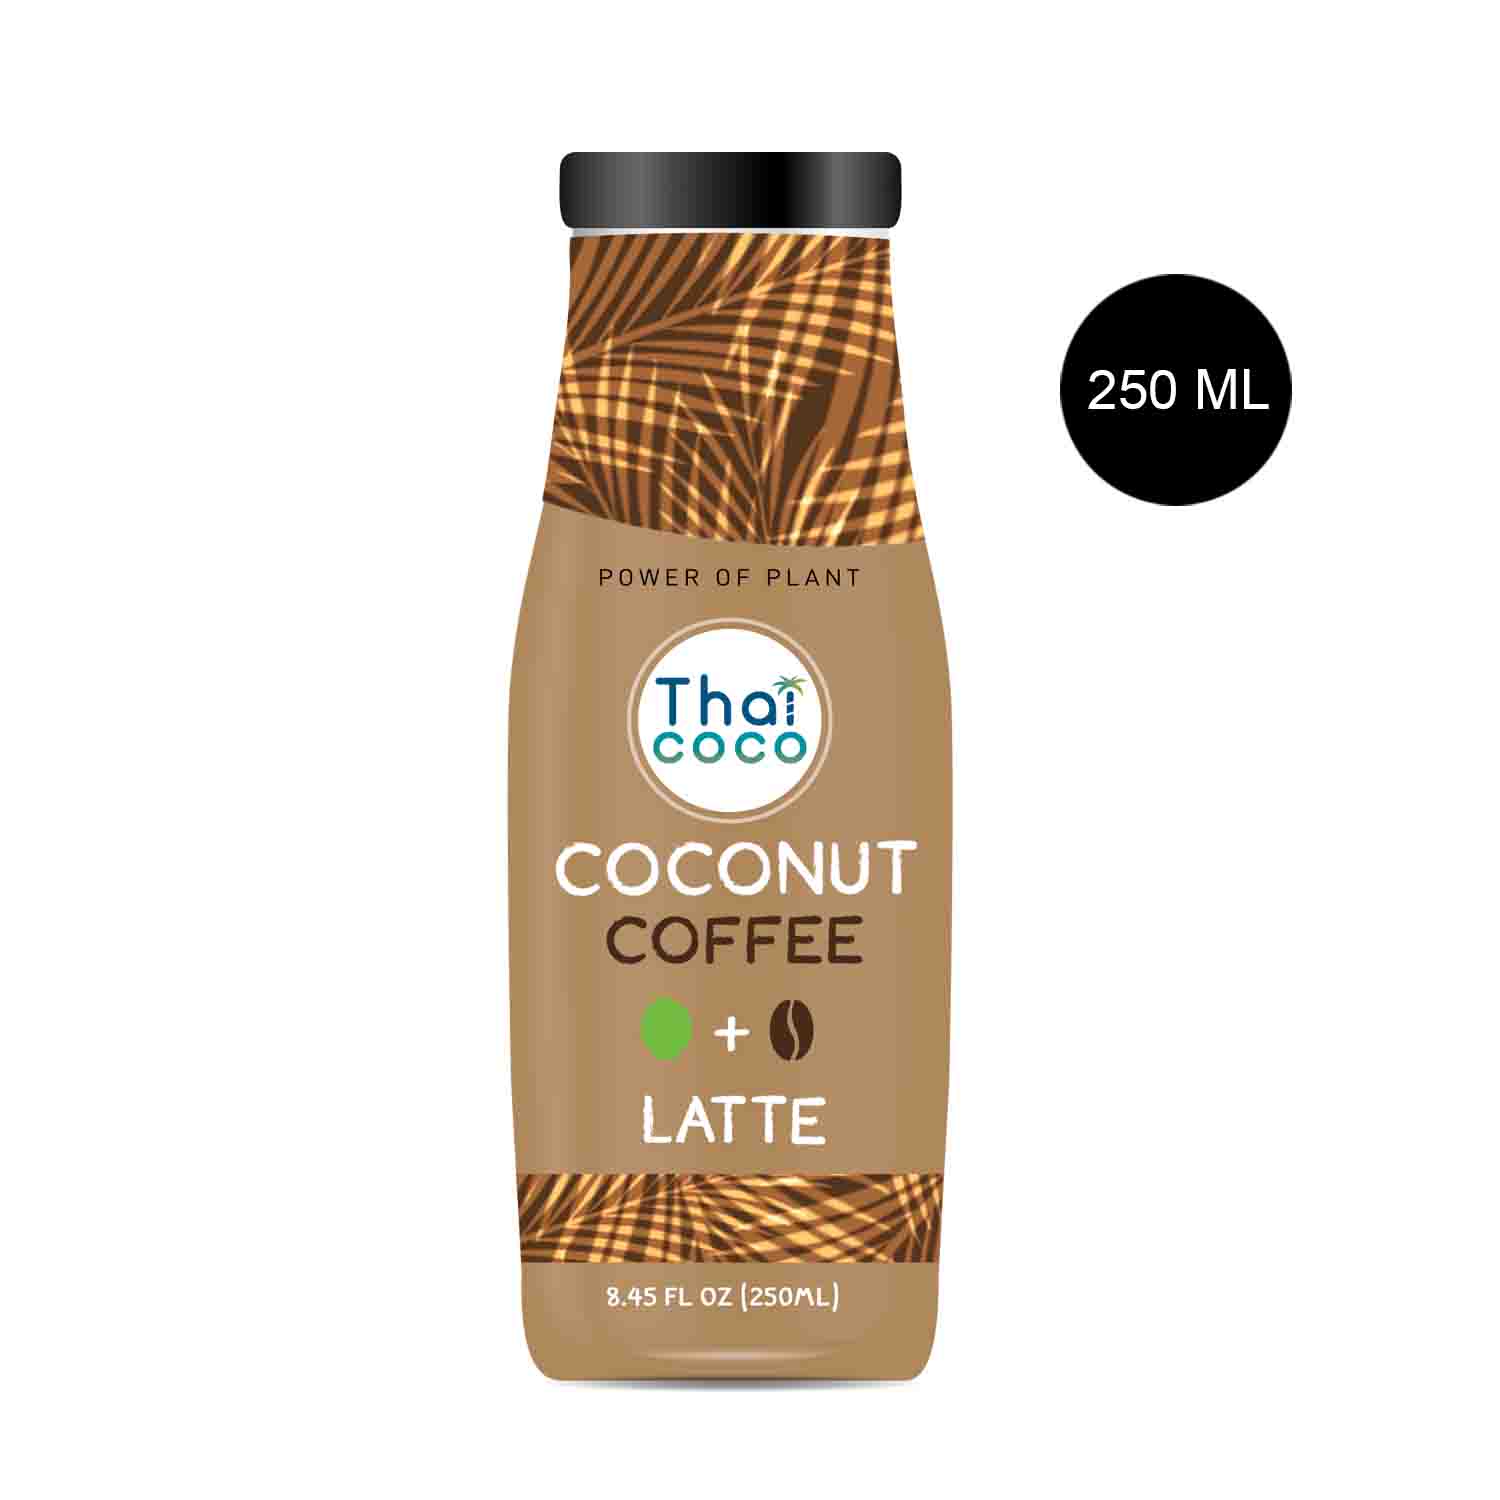 Thai Coco Coconut Coffee Latte 250 ml